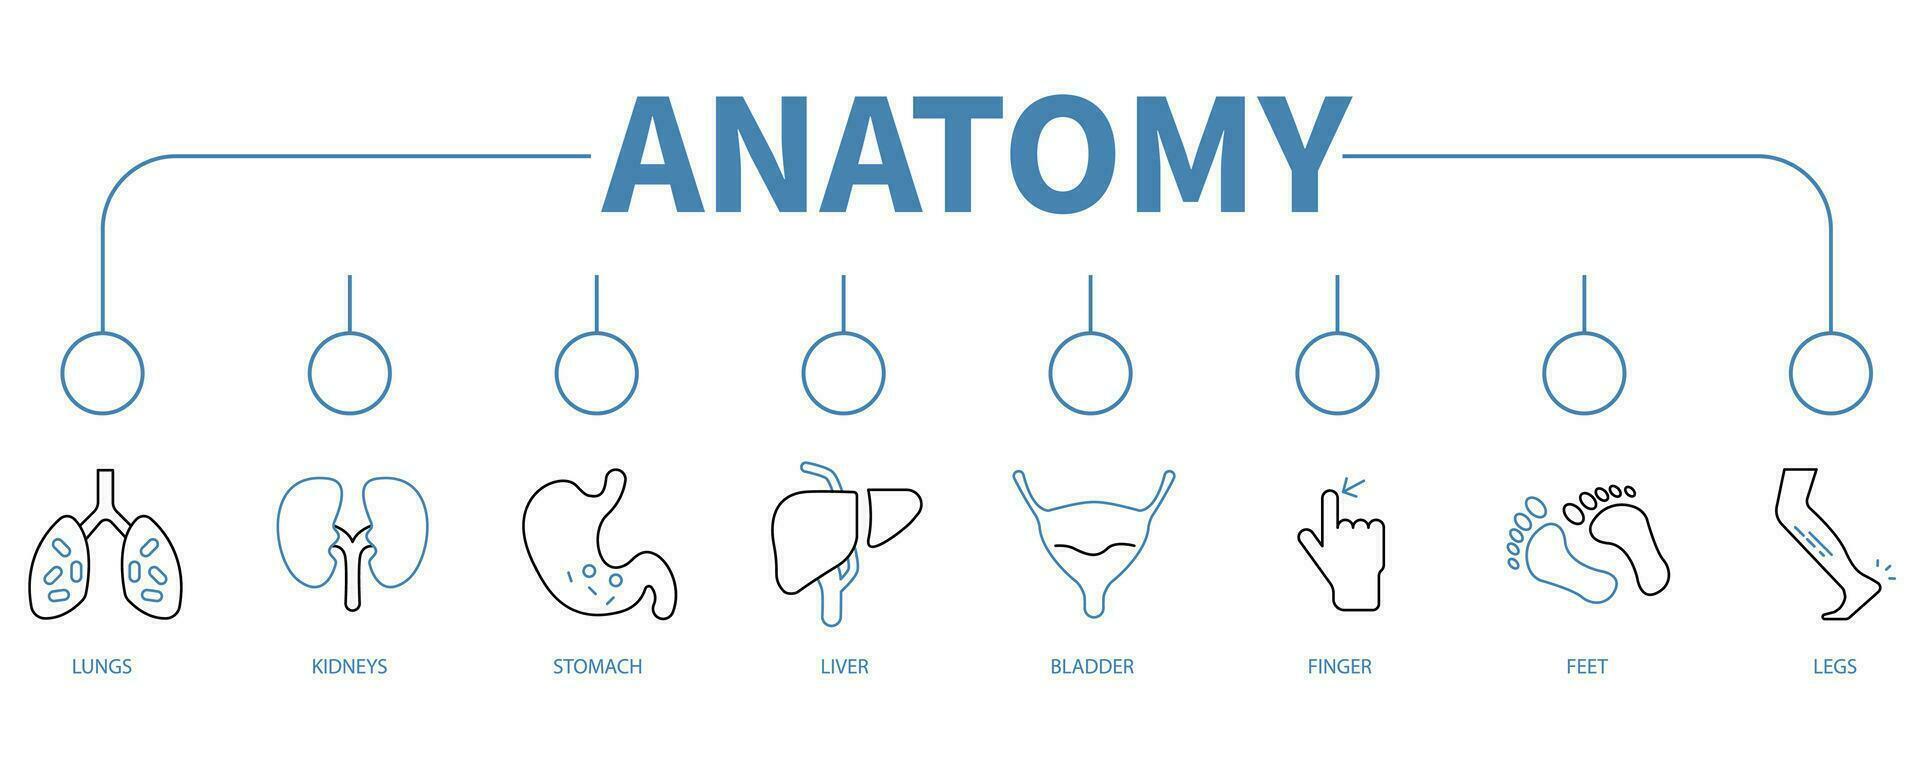 Anatomy banner web icon vector illustration concept